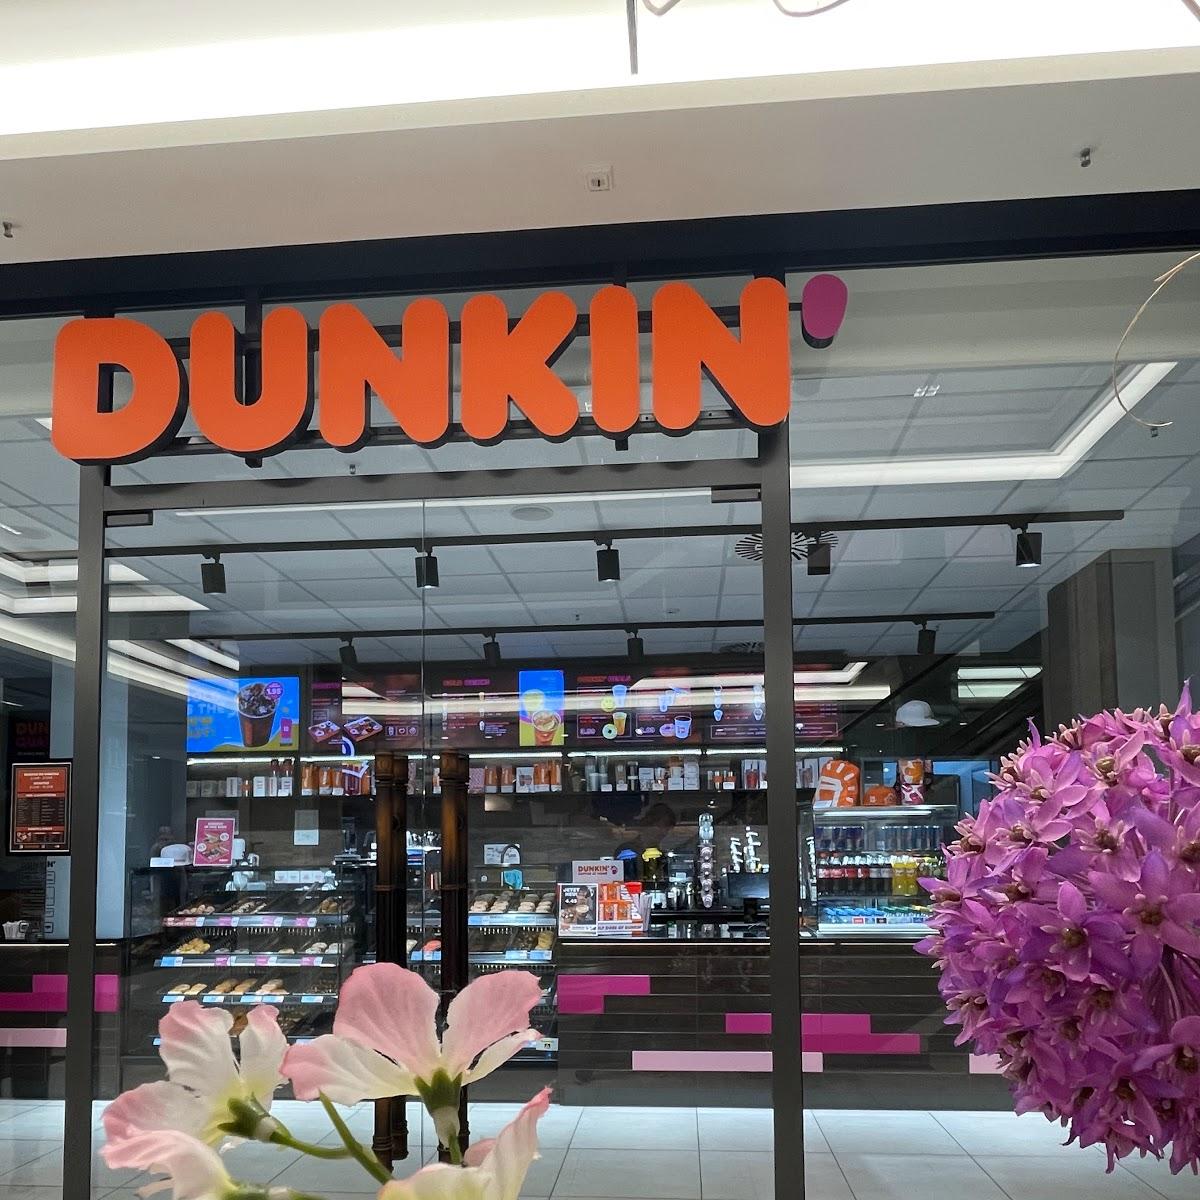 Restaurant "Dunkin`Donuts" in Berlin